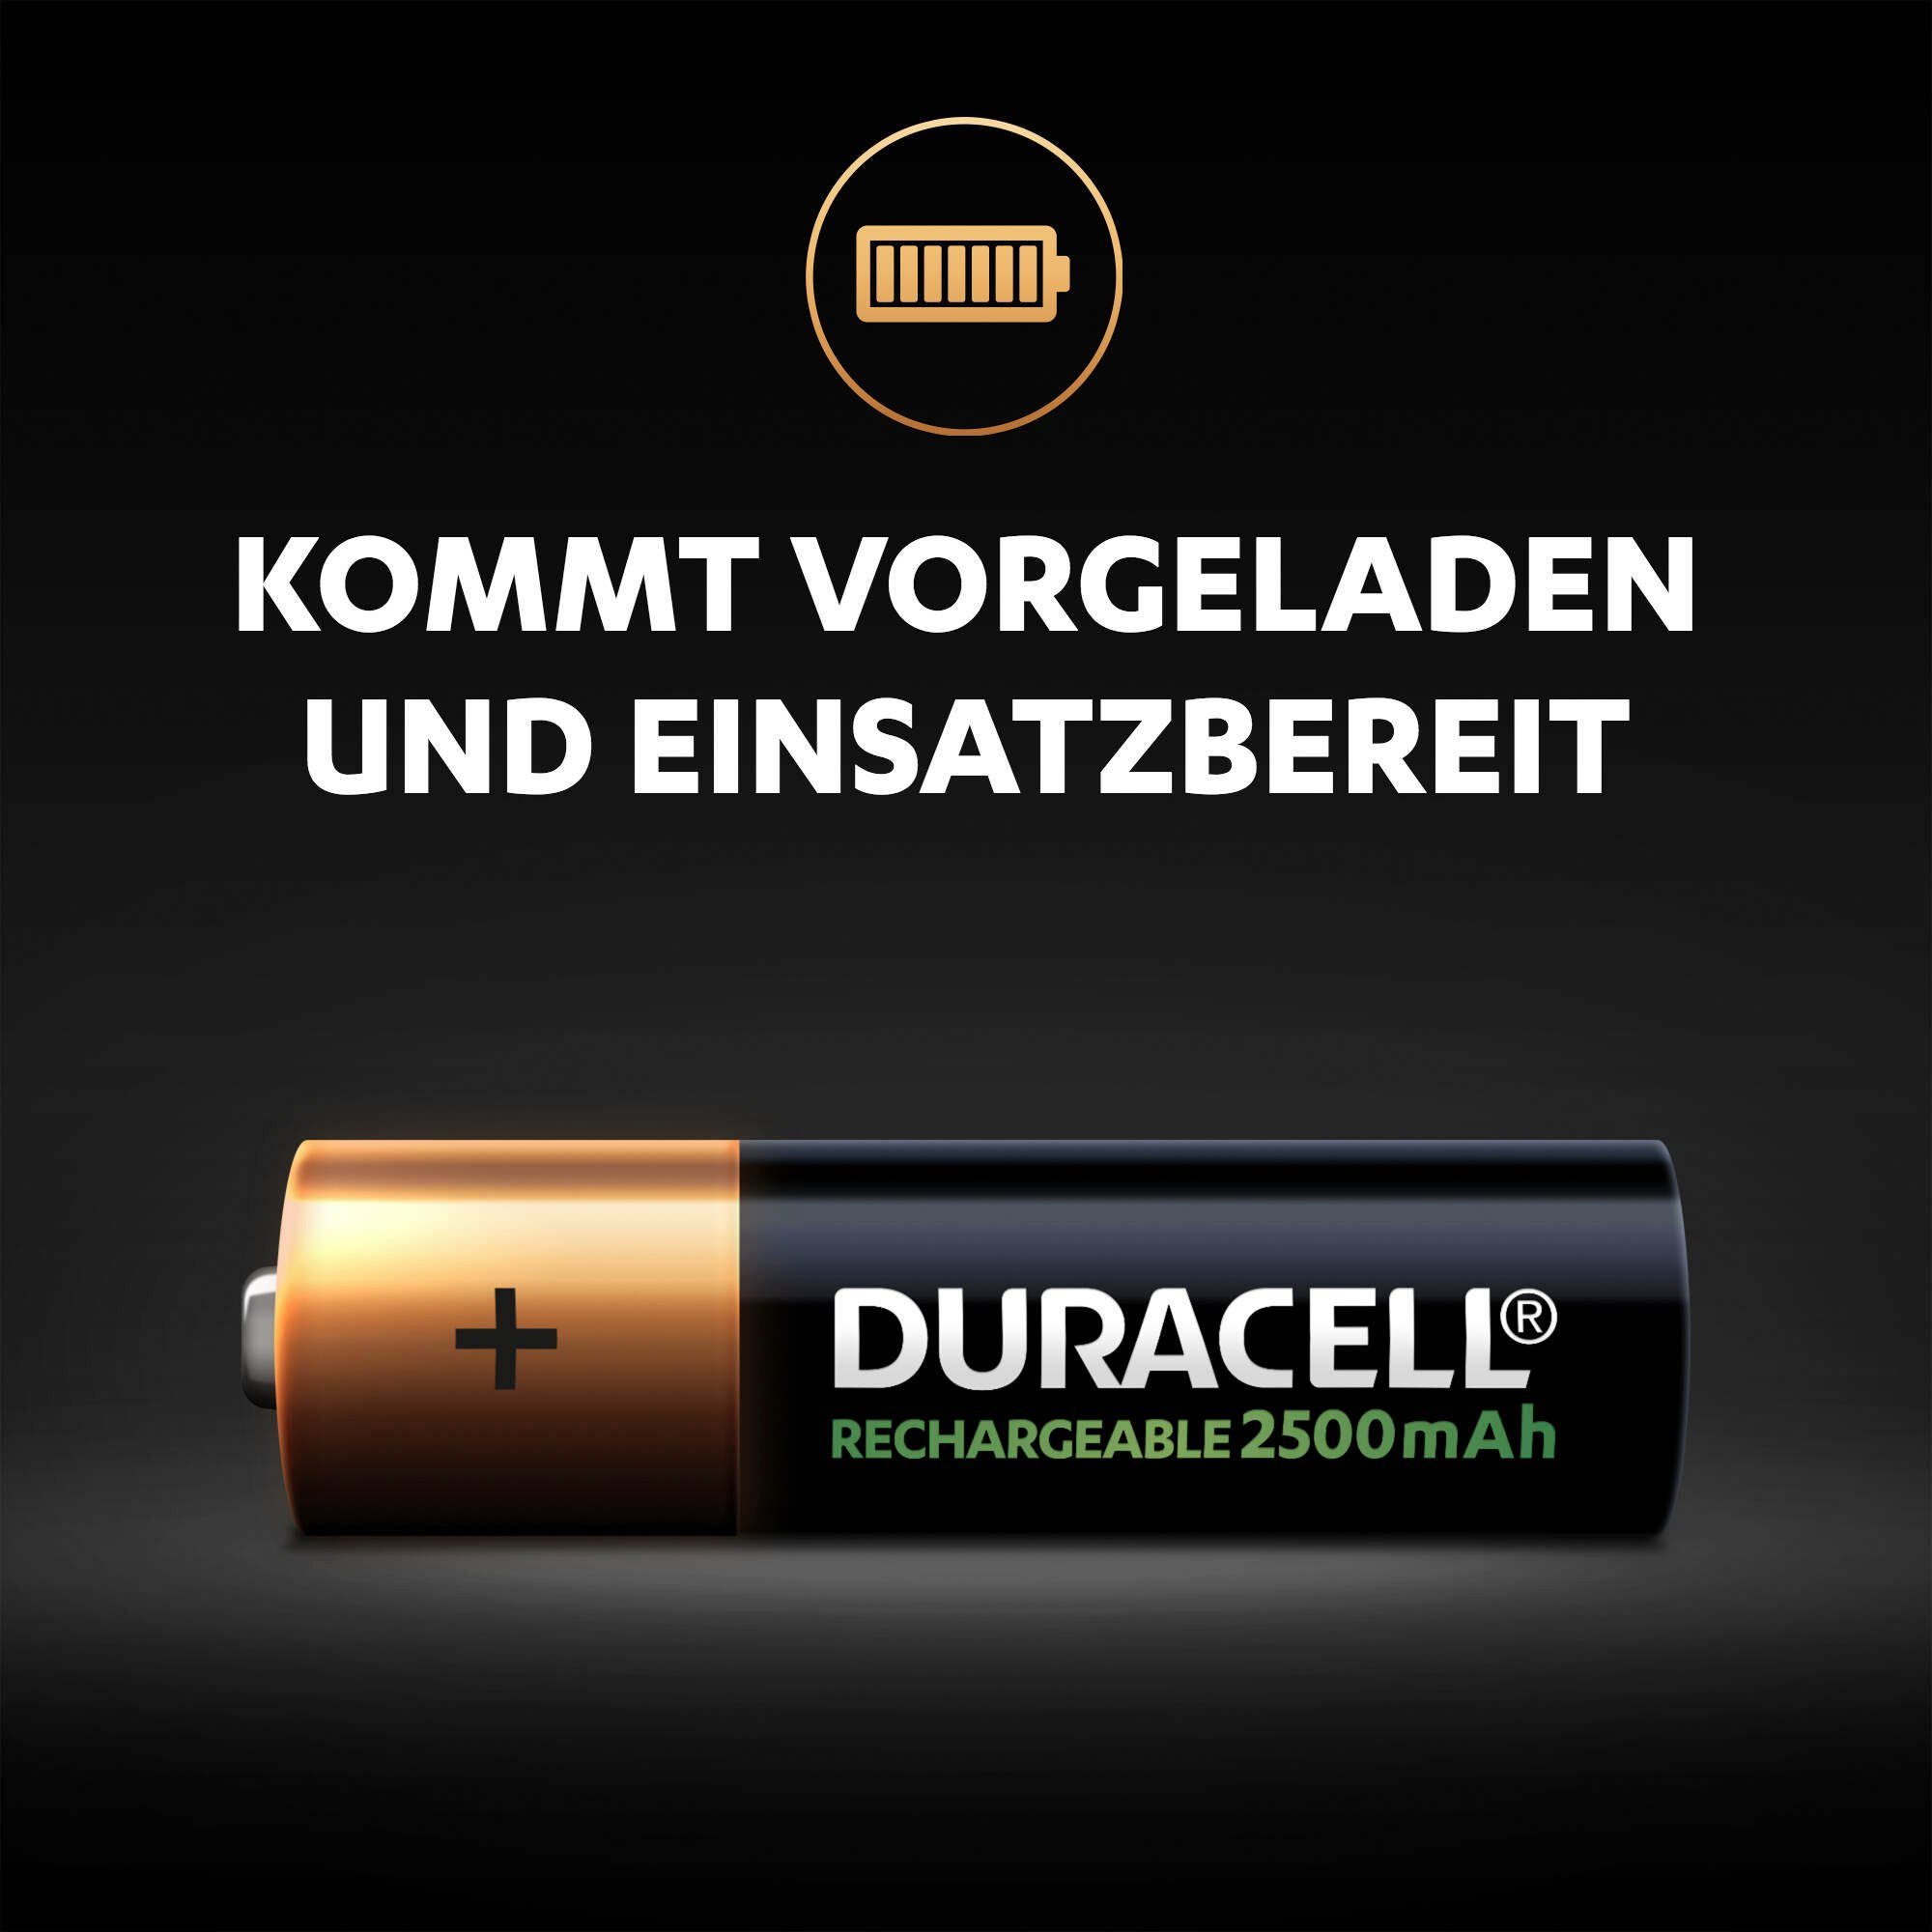 AA V, Ultra Batterie, wiederaufladbare Duracell St), 5 Akkus, mAh Recharge LR06 2500 4 Stck, 4 Jahre Garantie (1,2